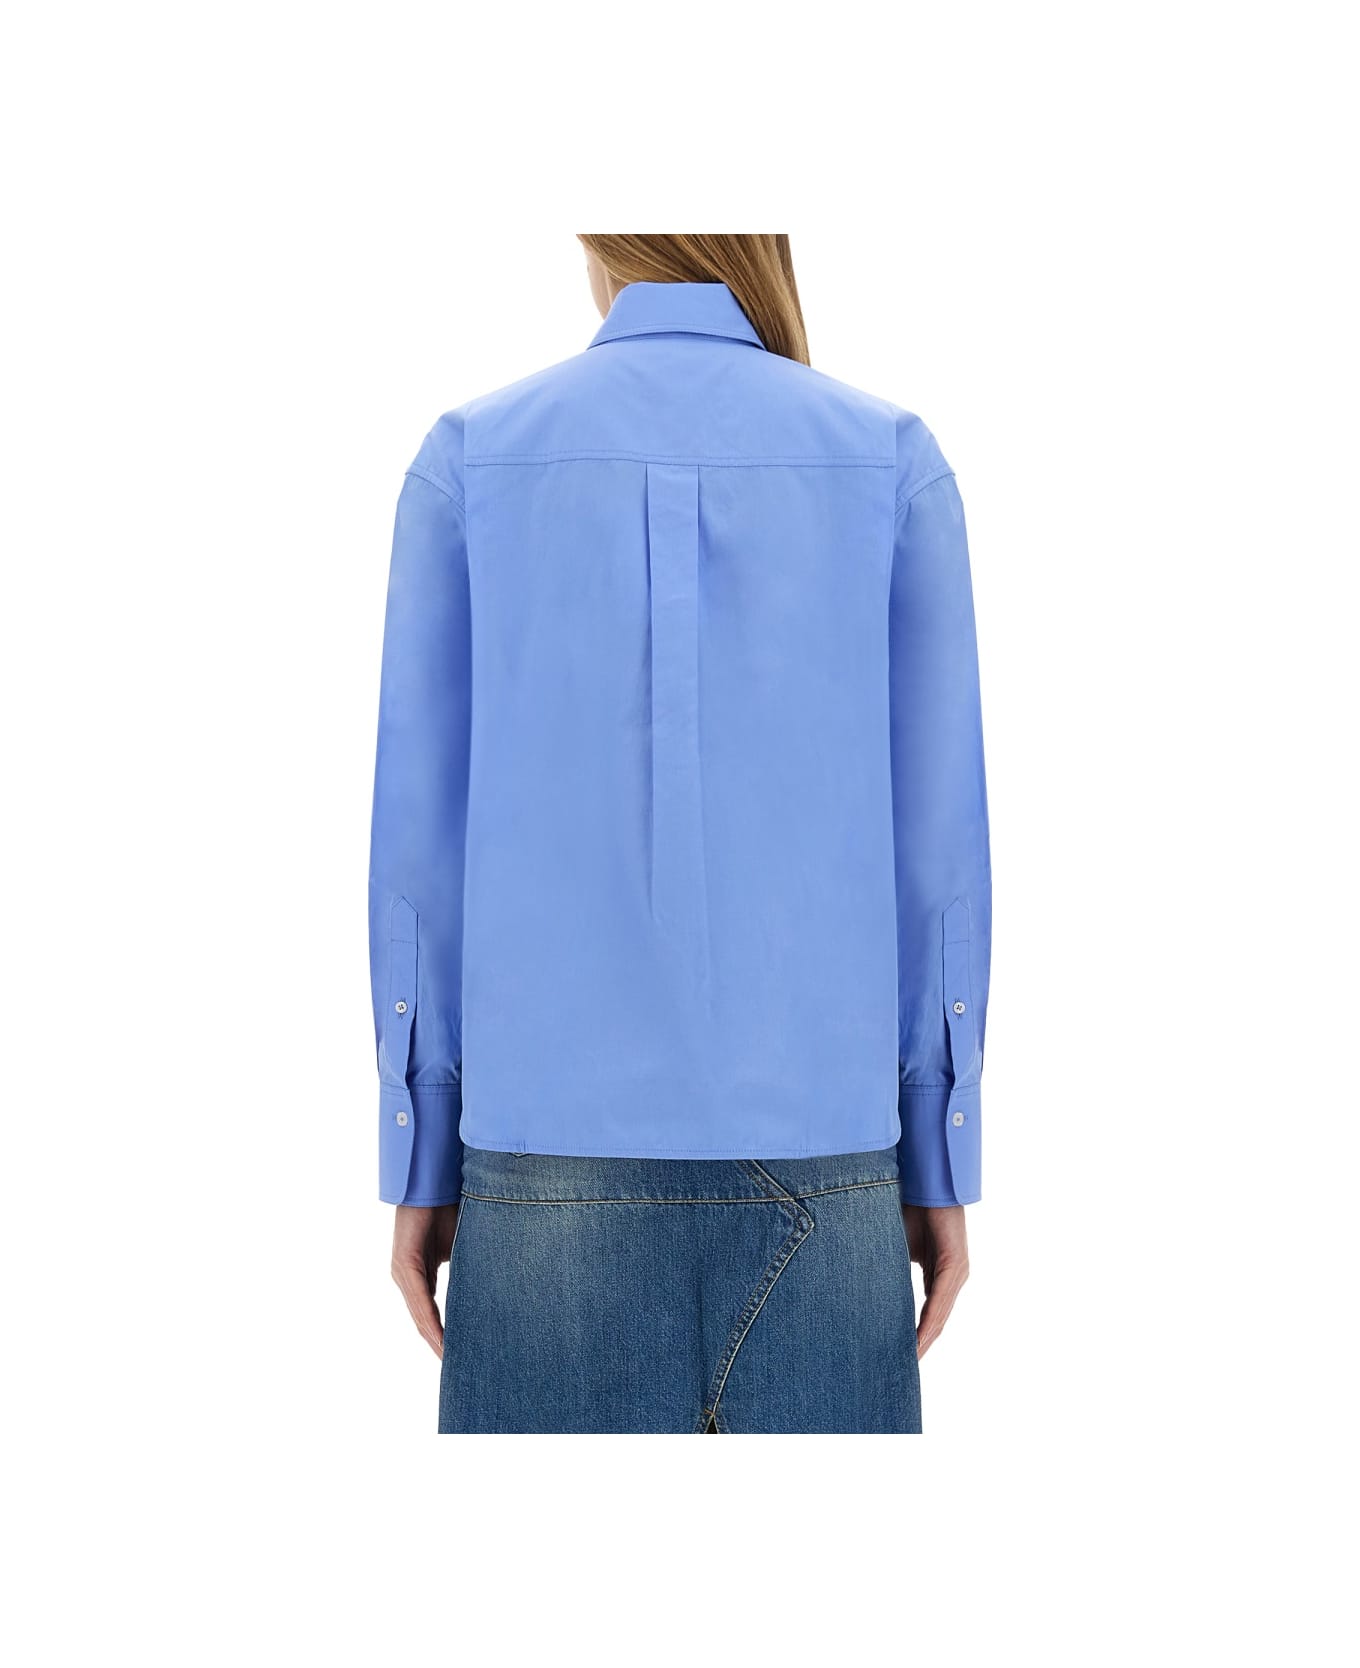 Victoria Beckham Cotton Shirt - BABY BLUE